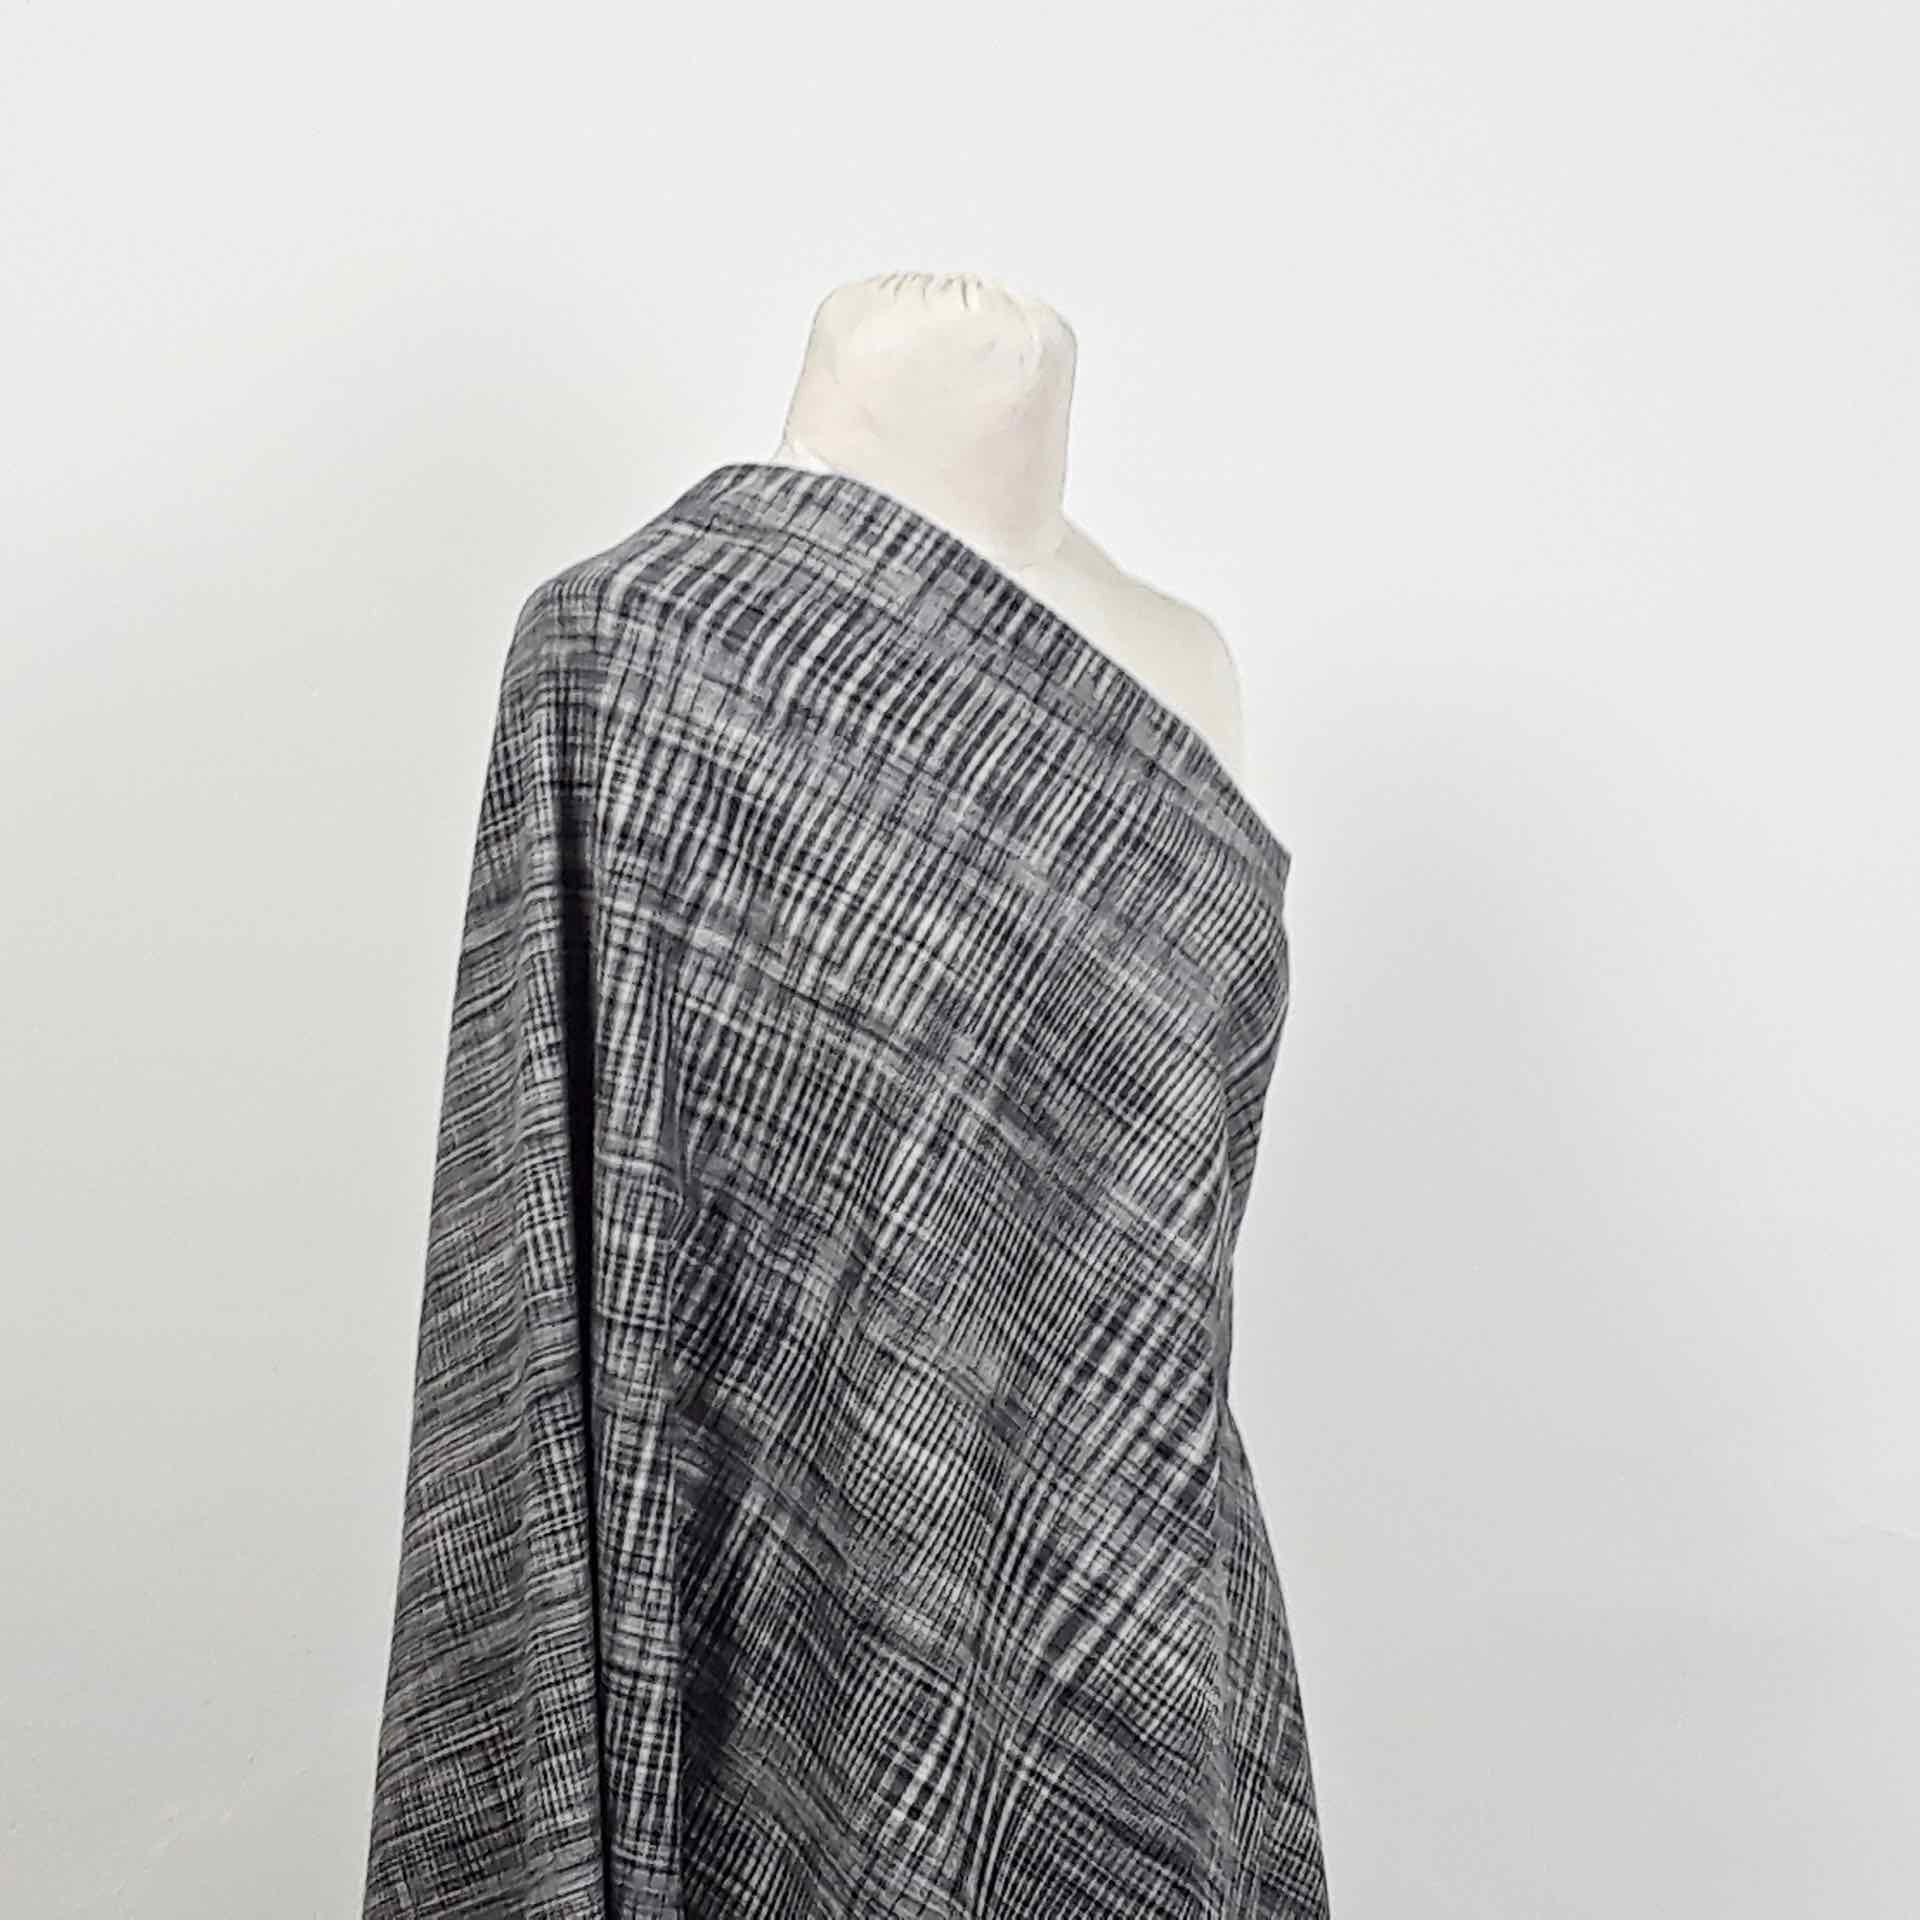 Handwoven Cotton Fabric Random Checks Black by the Half | Etsy